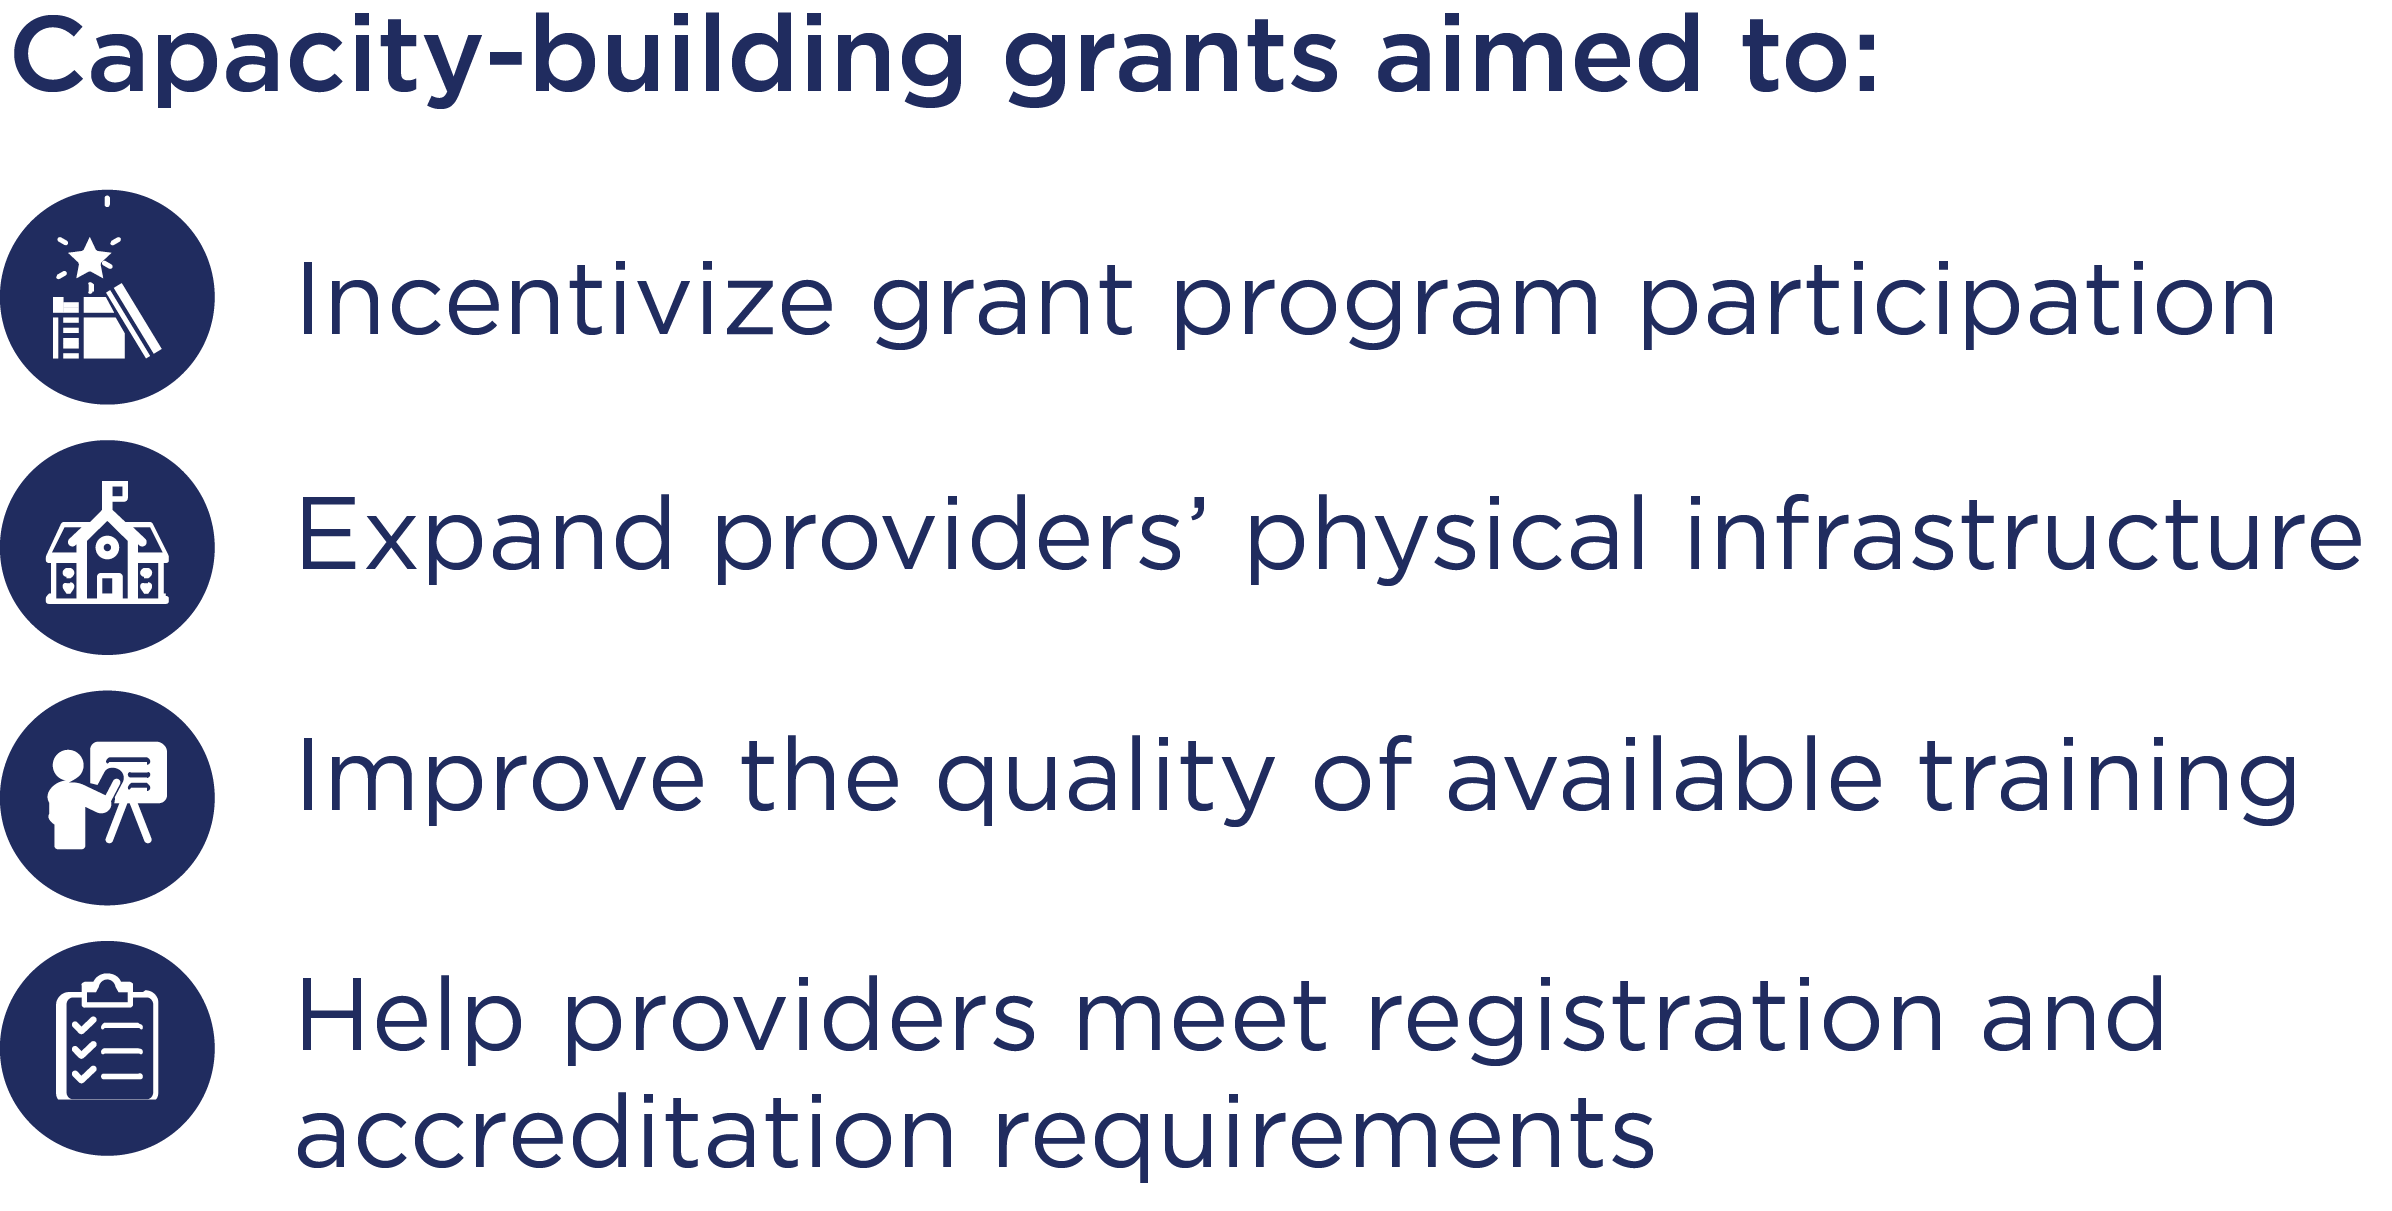 aim of capacity building grants